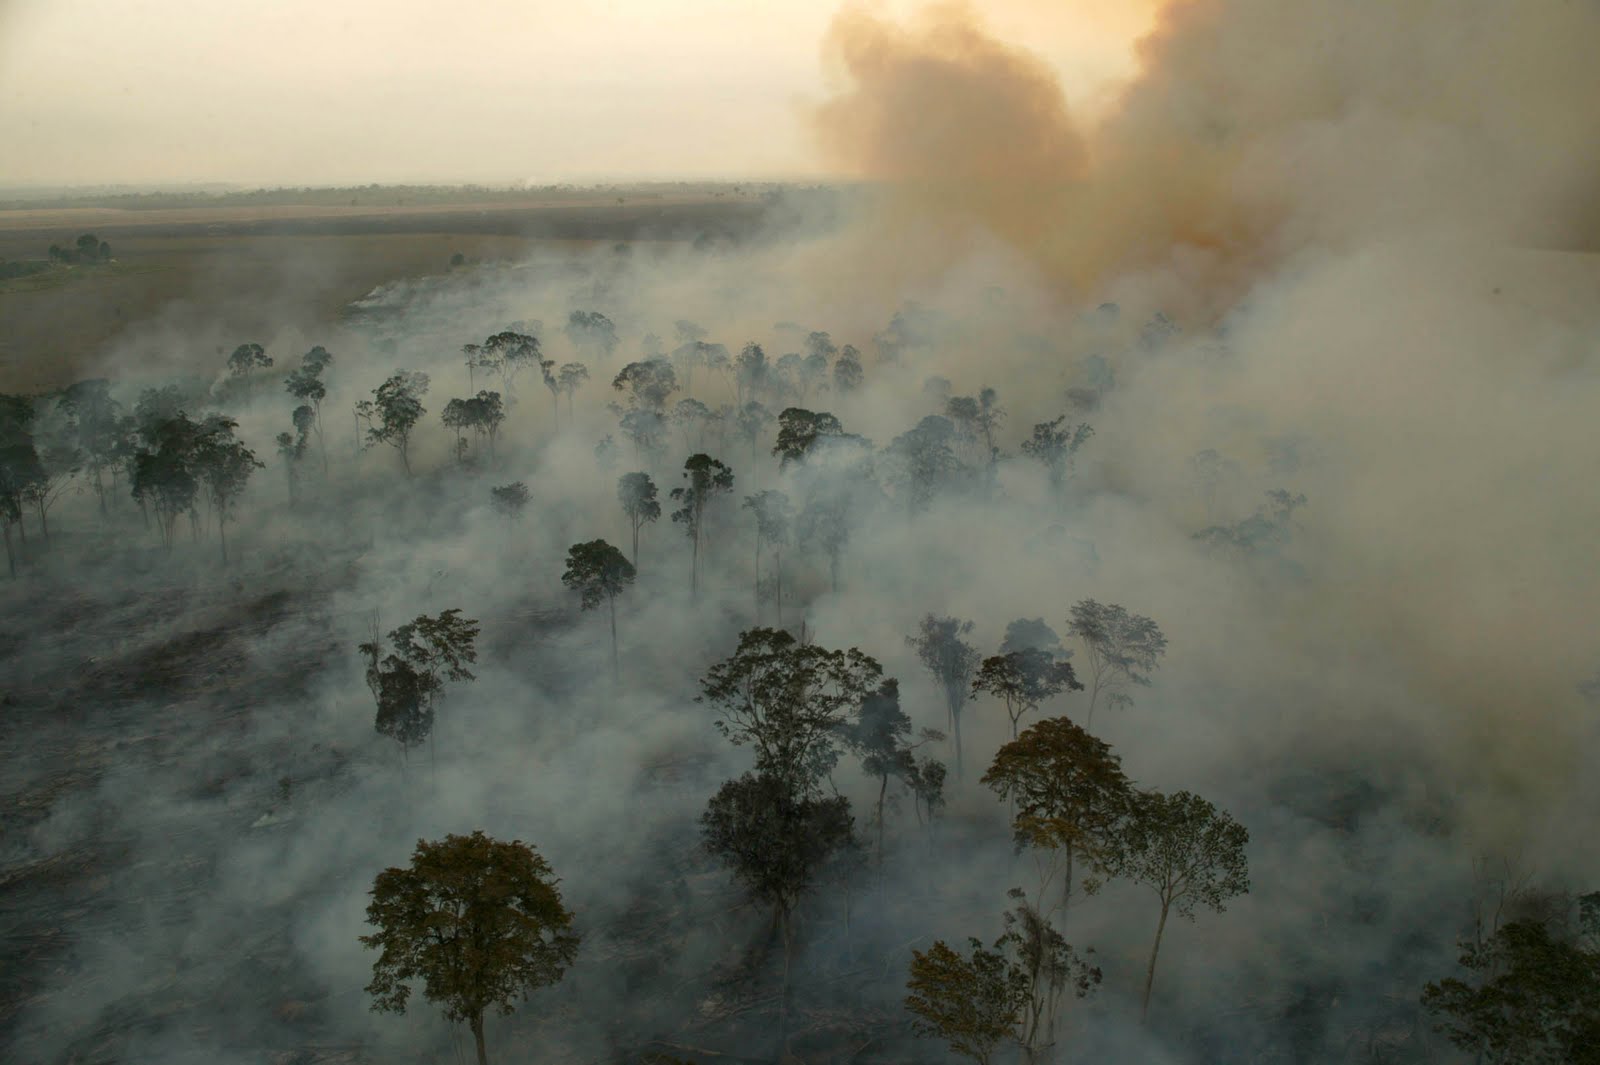 Para geógrafo, atual crise ambiental poderá fazer Amazônia virar savana